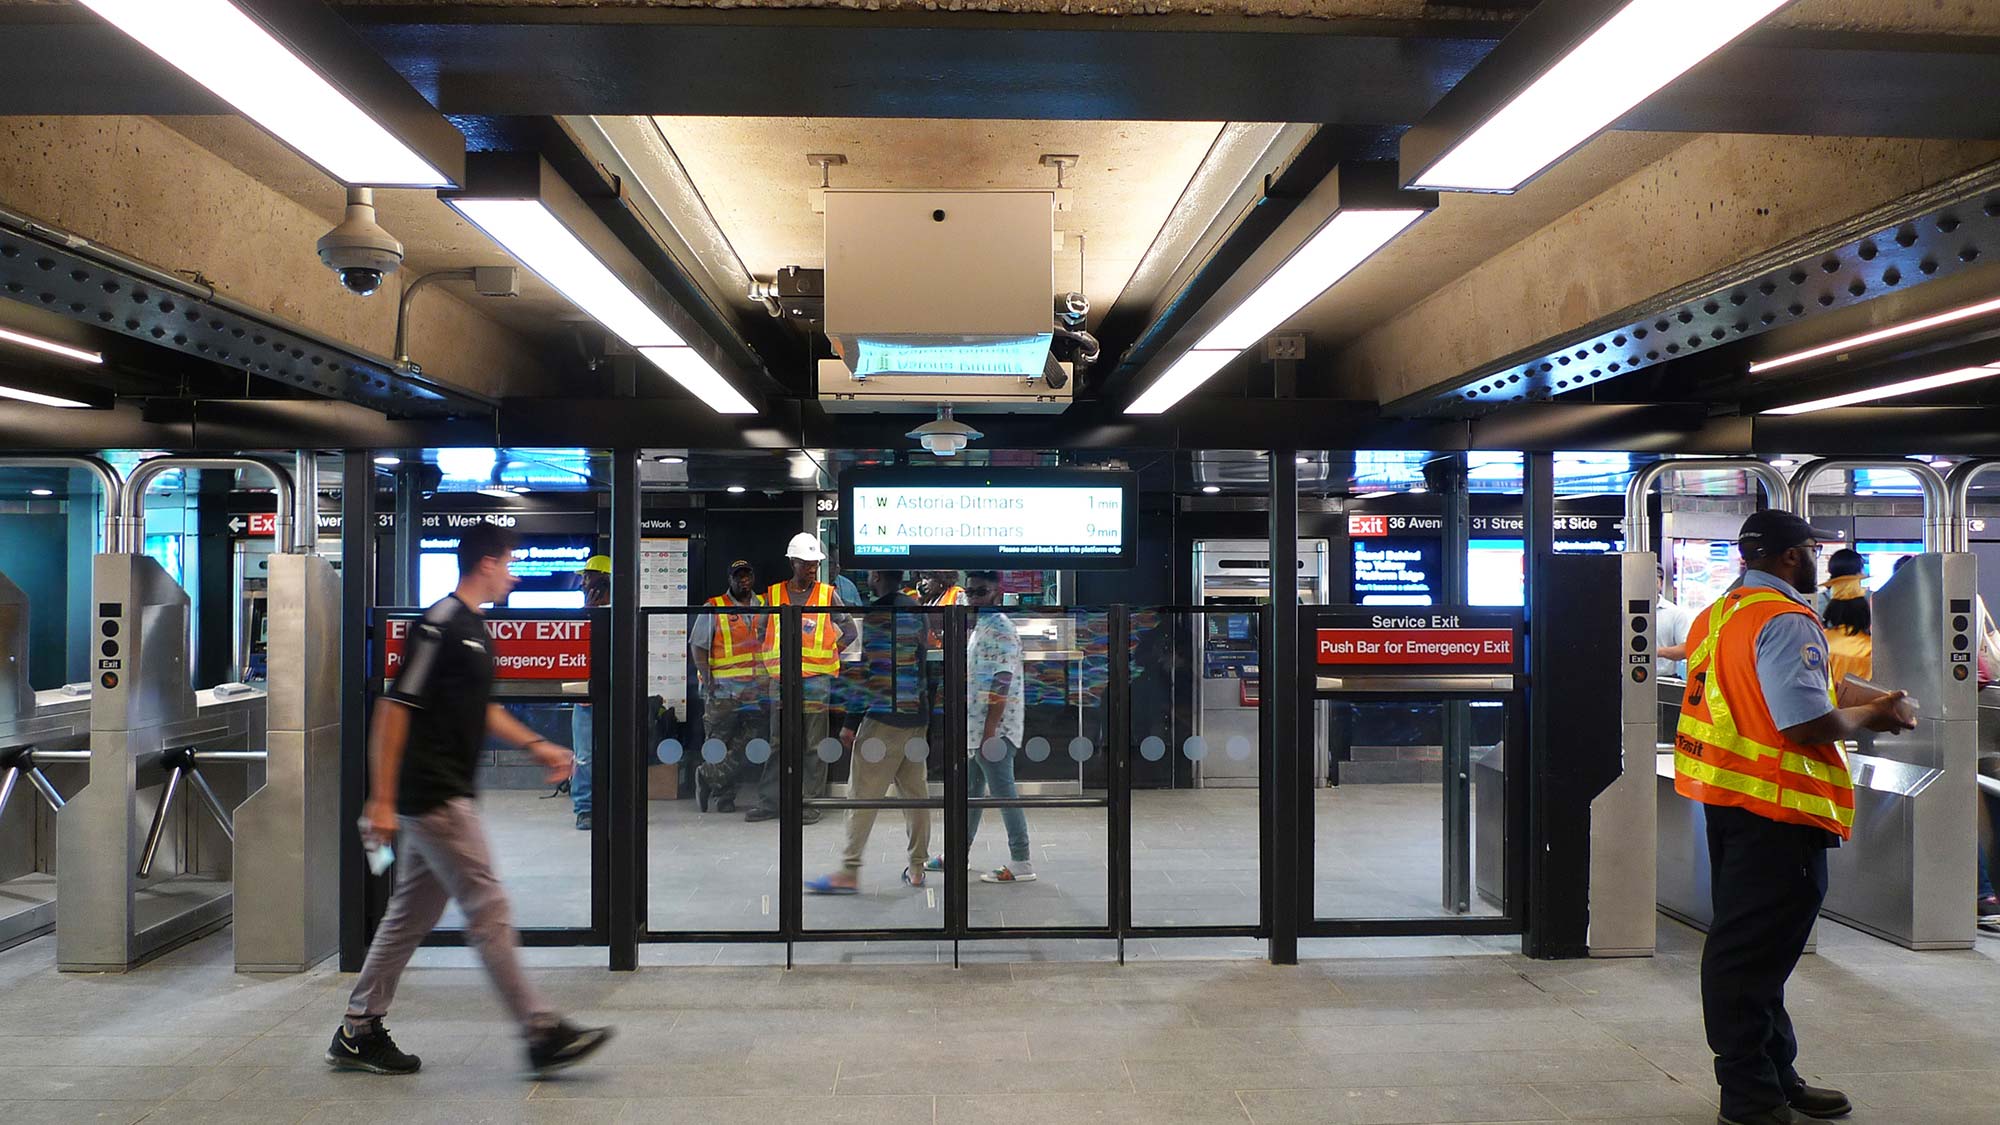 Turnstile at refurbished subway station